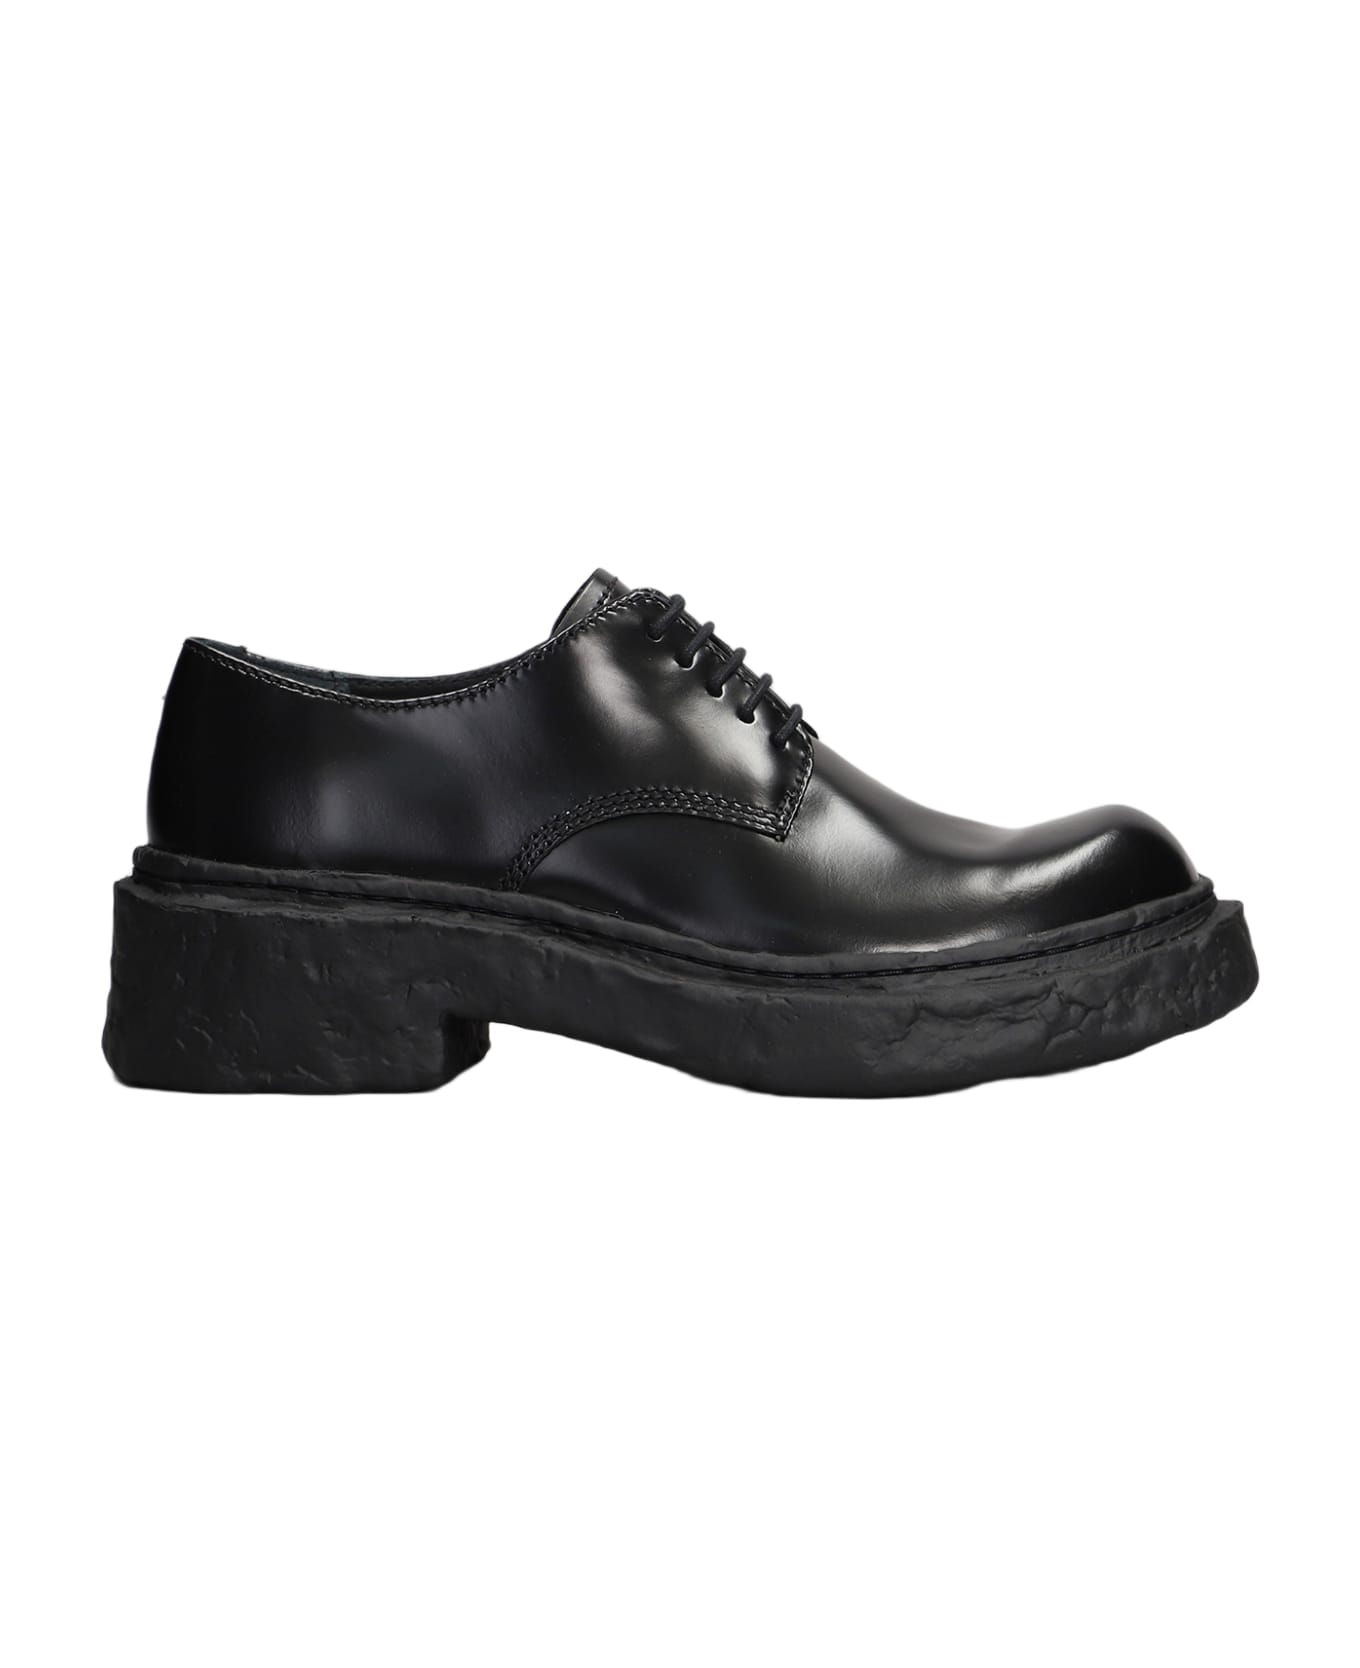 Camper Vamonos Lace Up Shoes In Black Leather - black